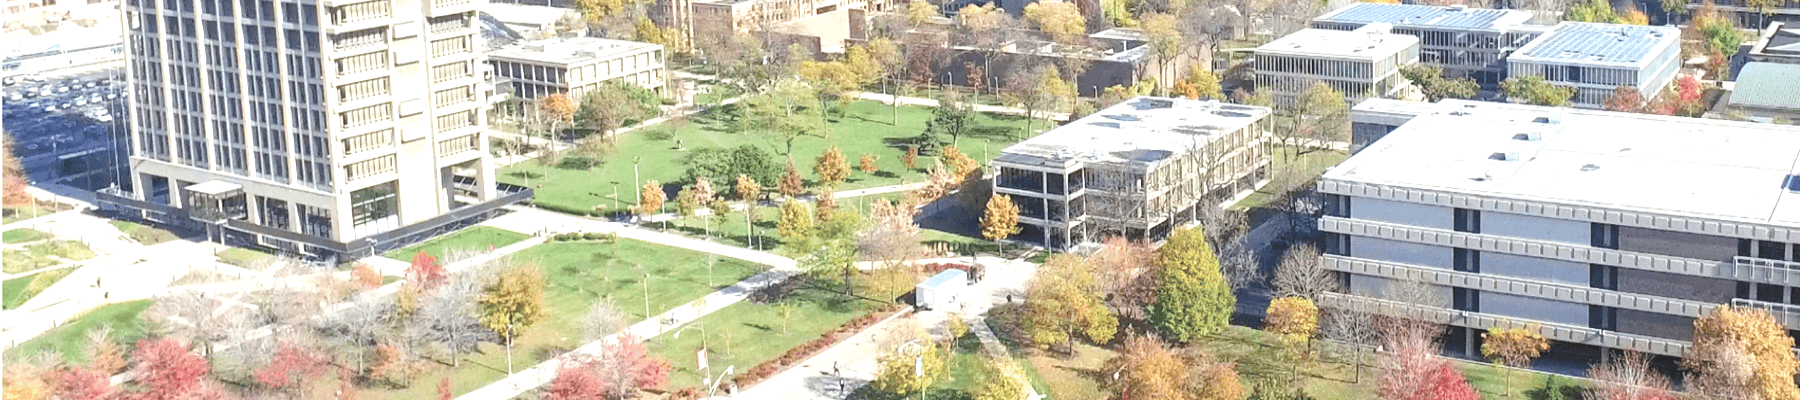 University of Illinois - Chicago